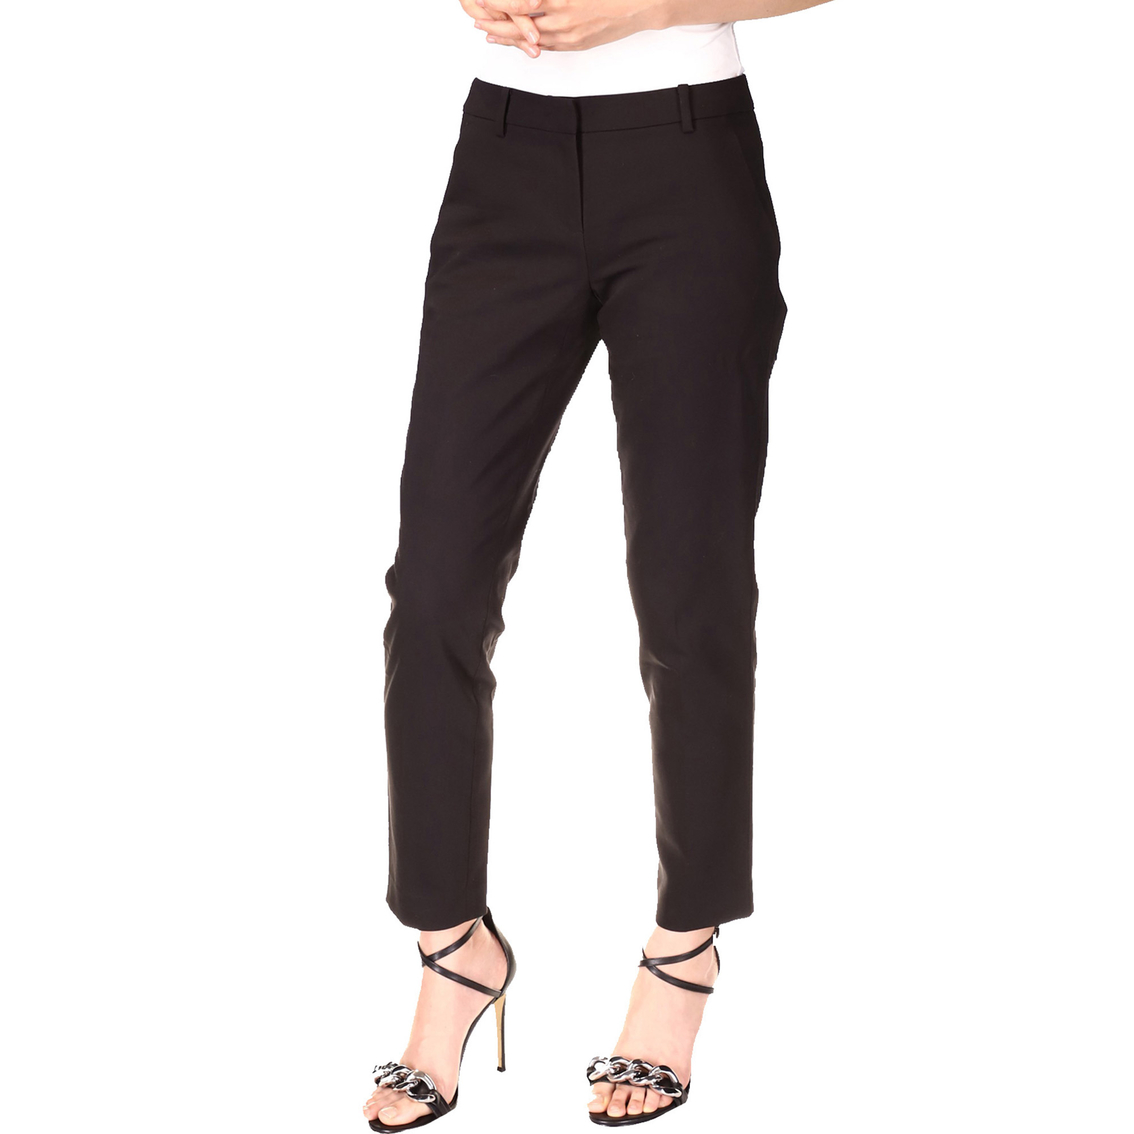 Michael Kors Miranda Pants, Pants, Clothing & Accessories